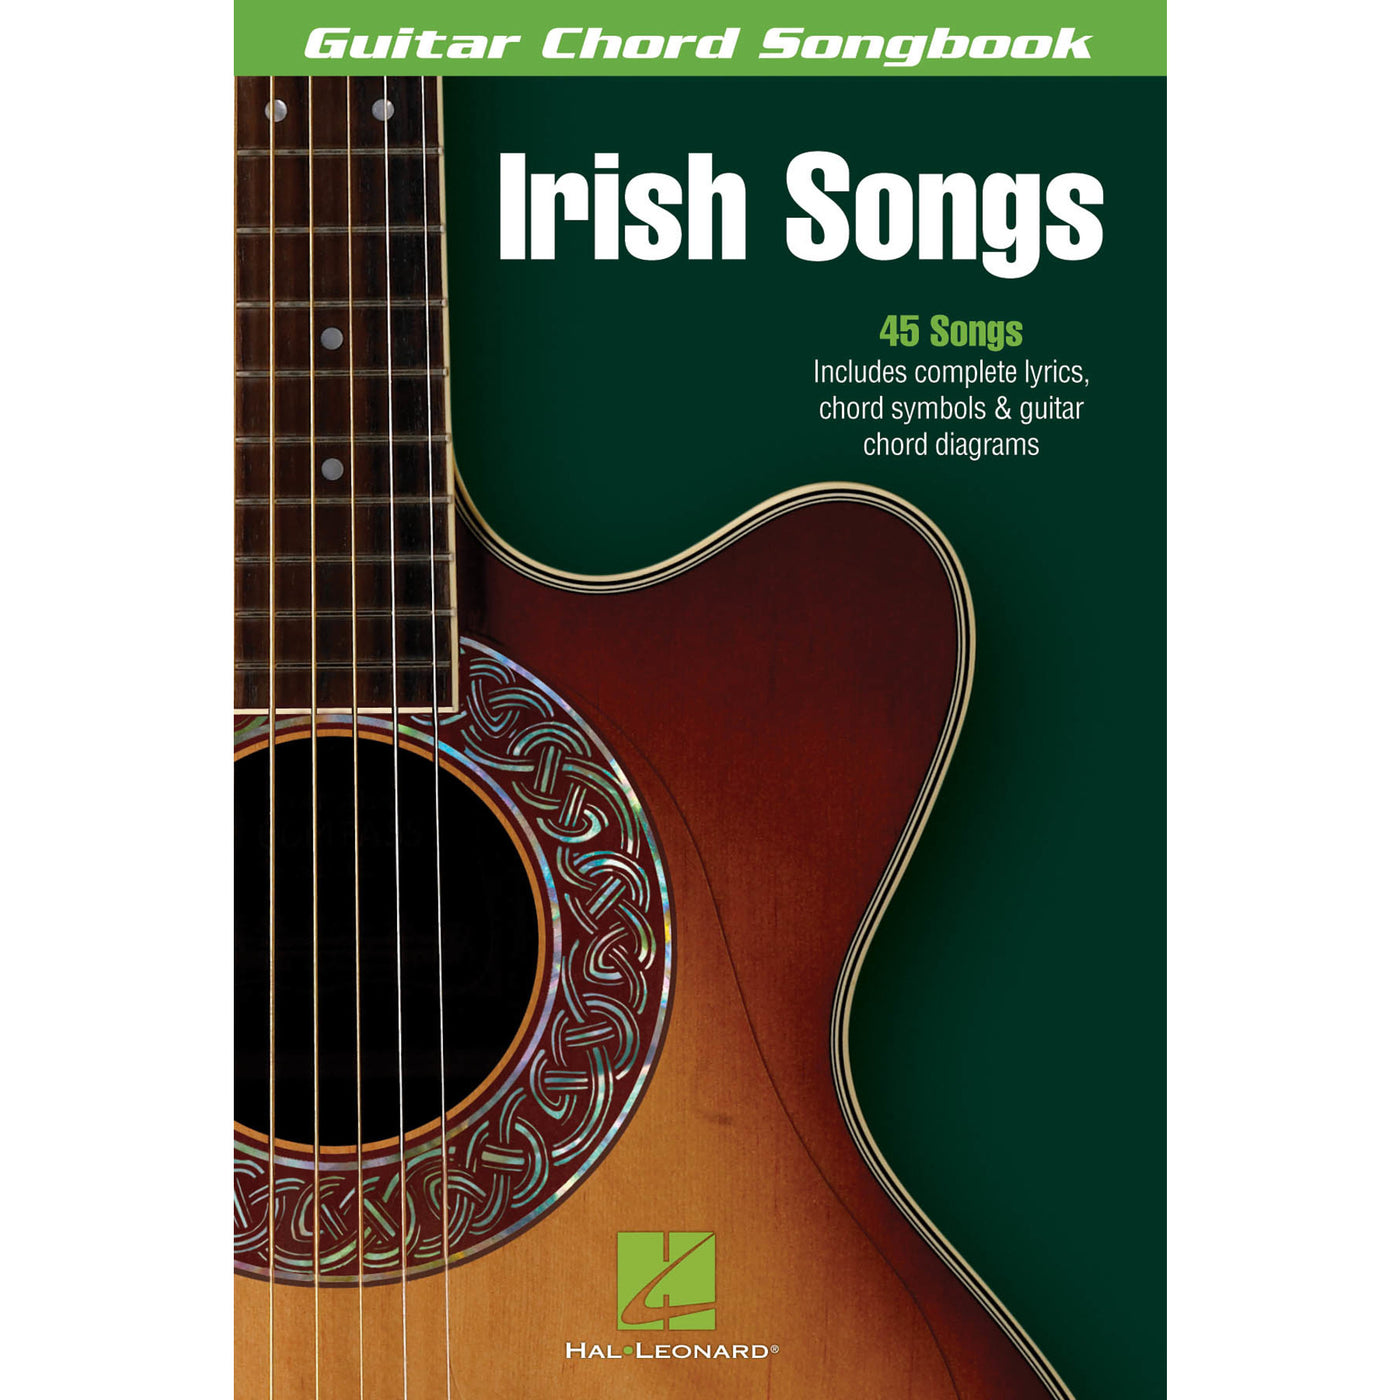 Irish Songs Booklet